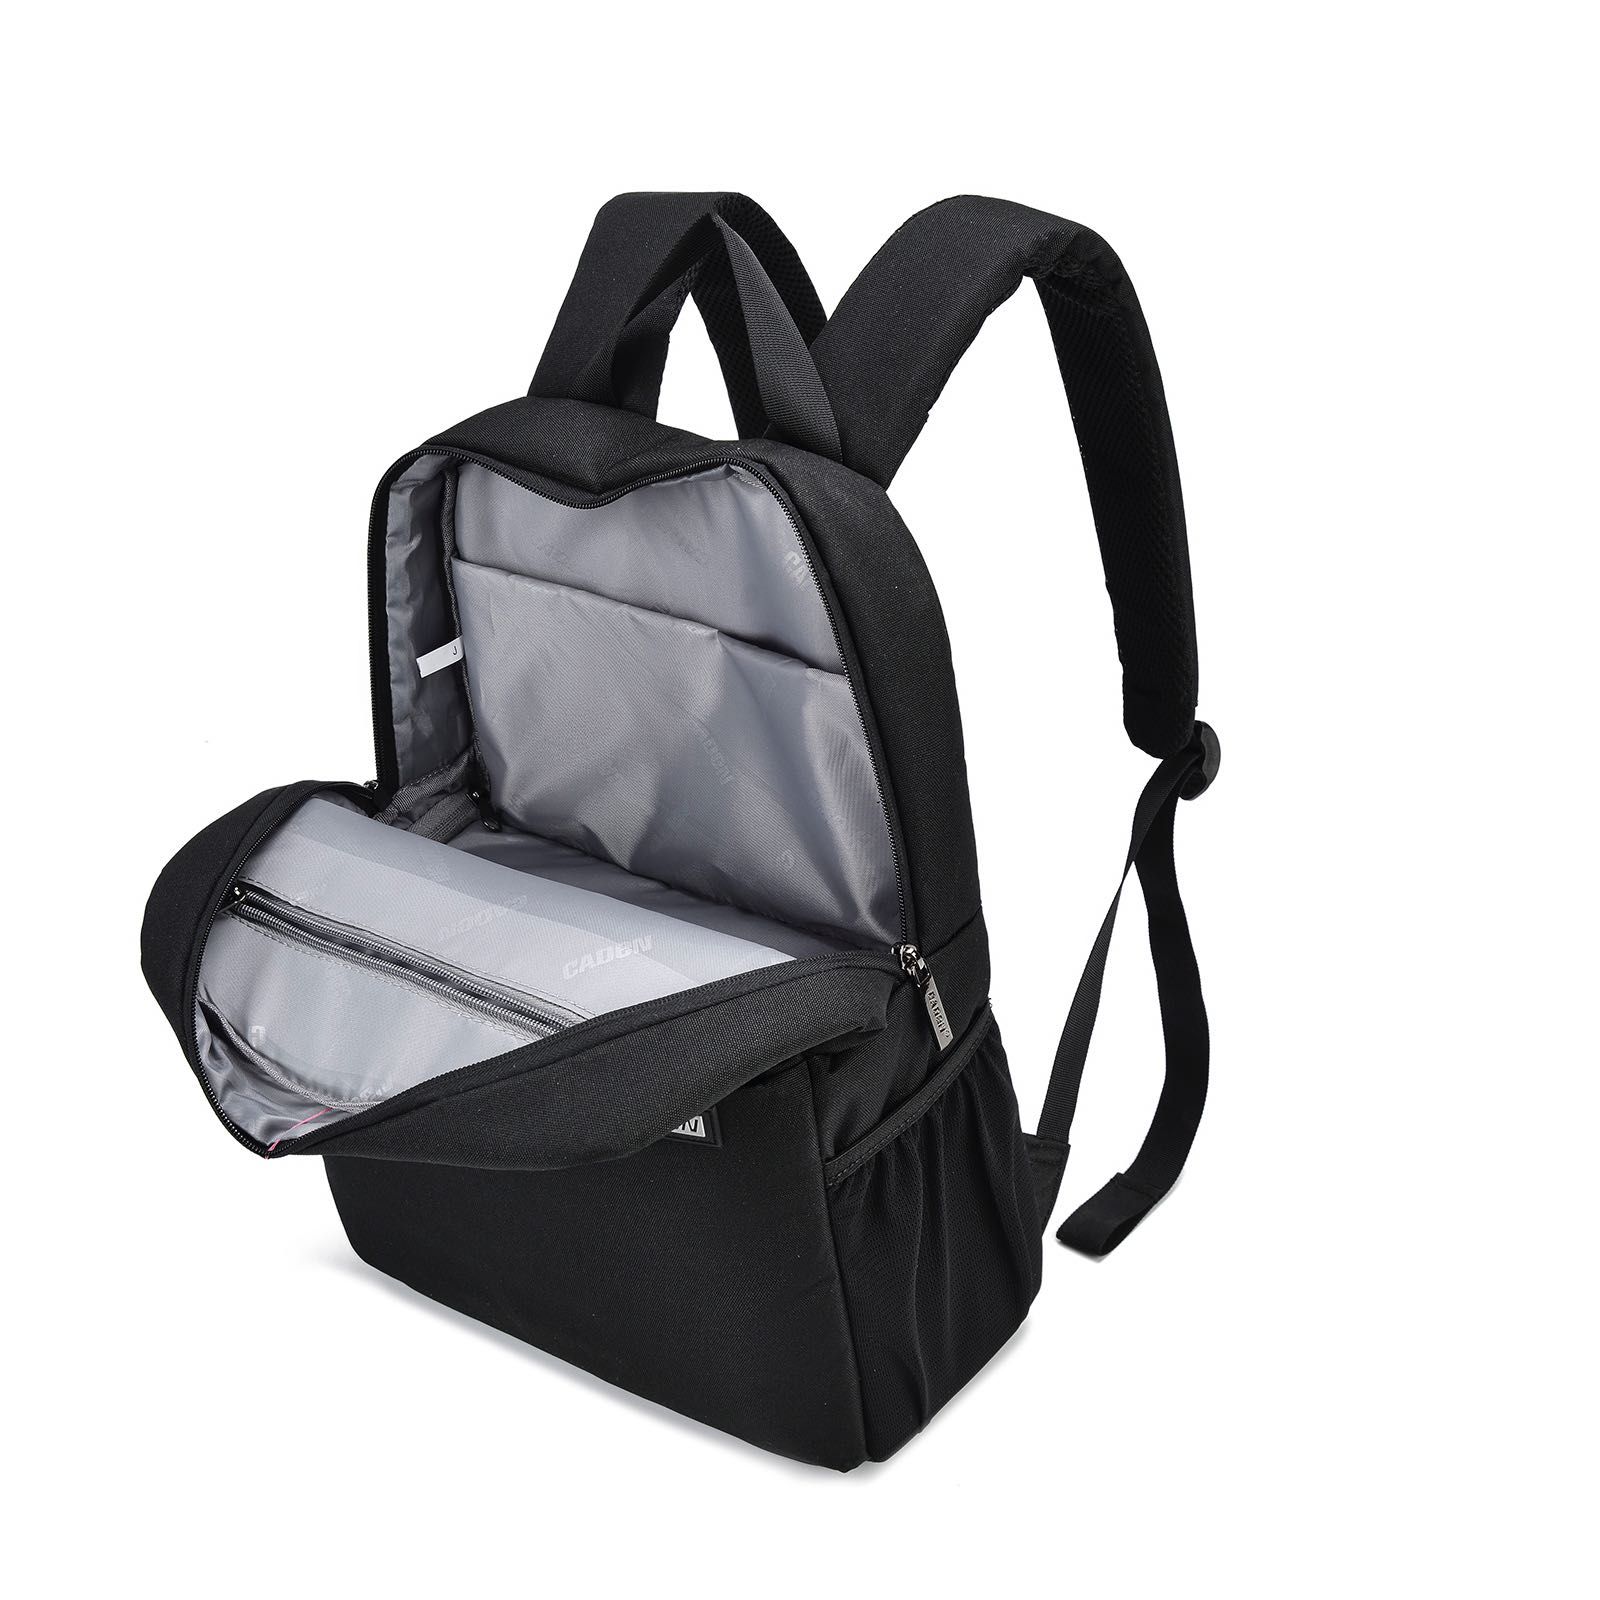 Фоторюкзак Caden L4 для фотоапарата/фотокамери/рюкзак для фототехніки